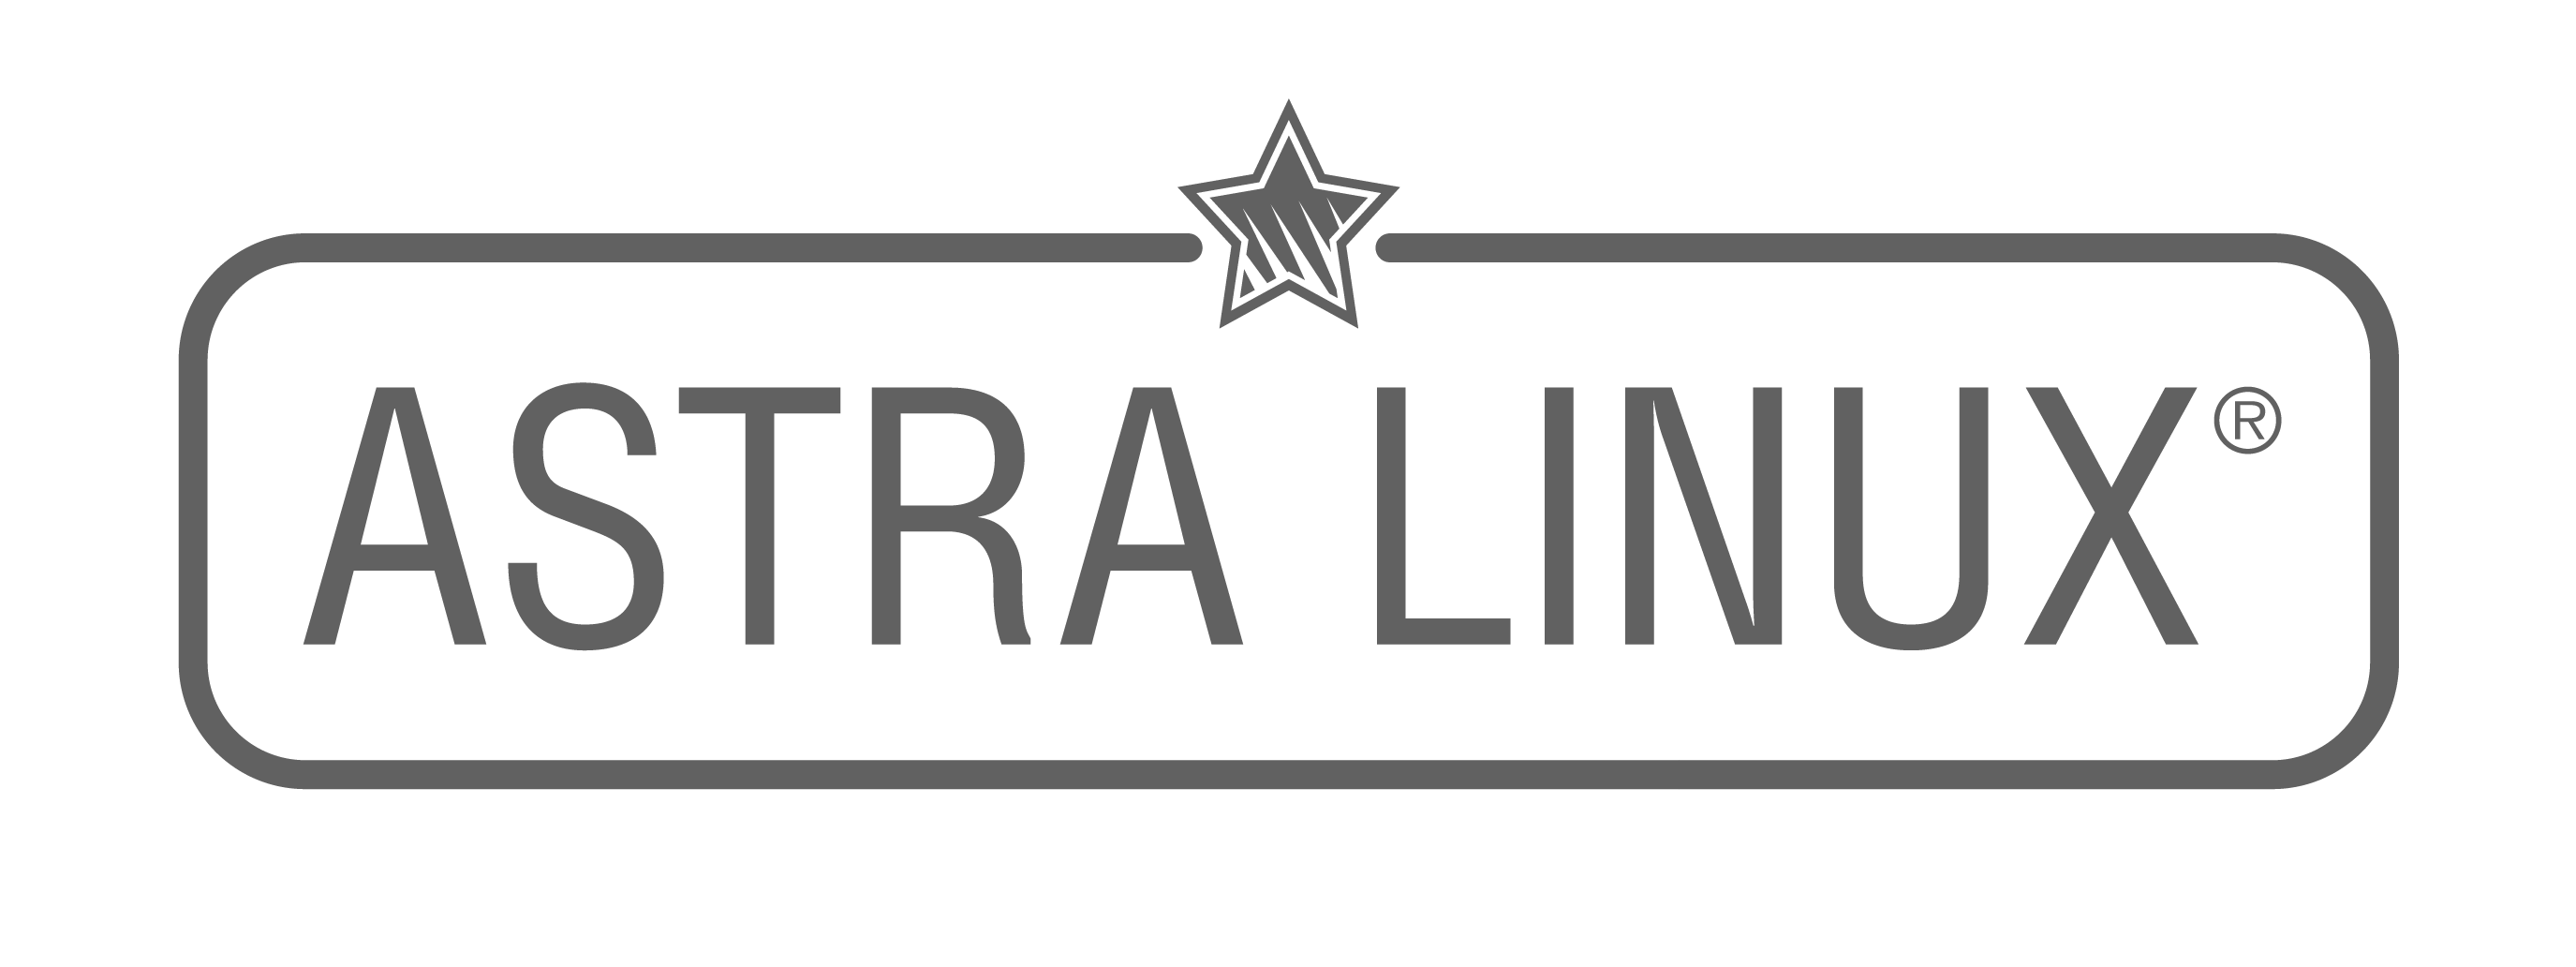 astra linux logo 2019 bw